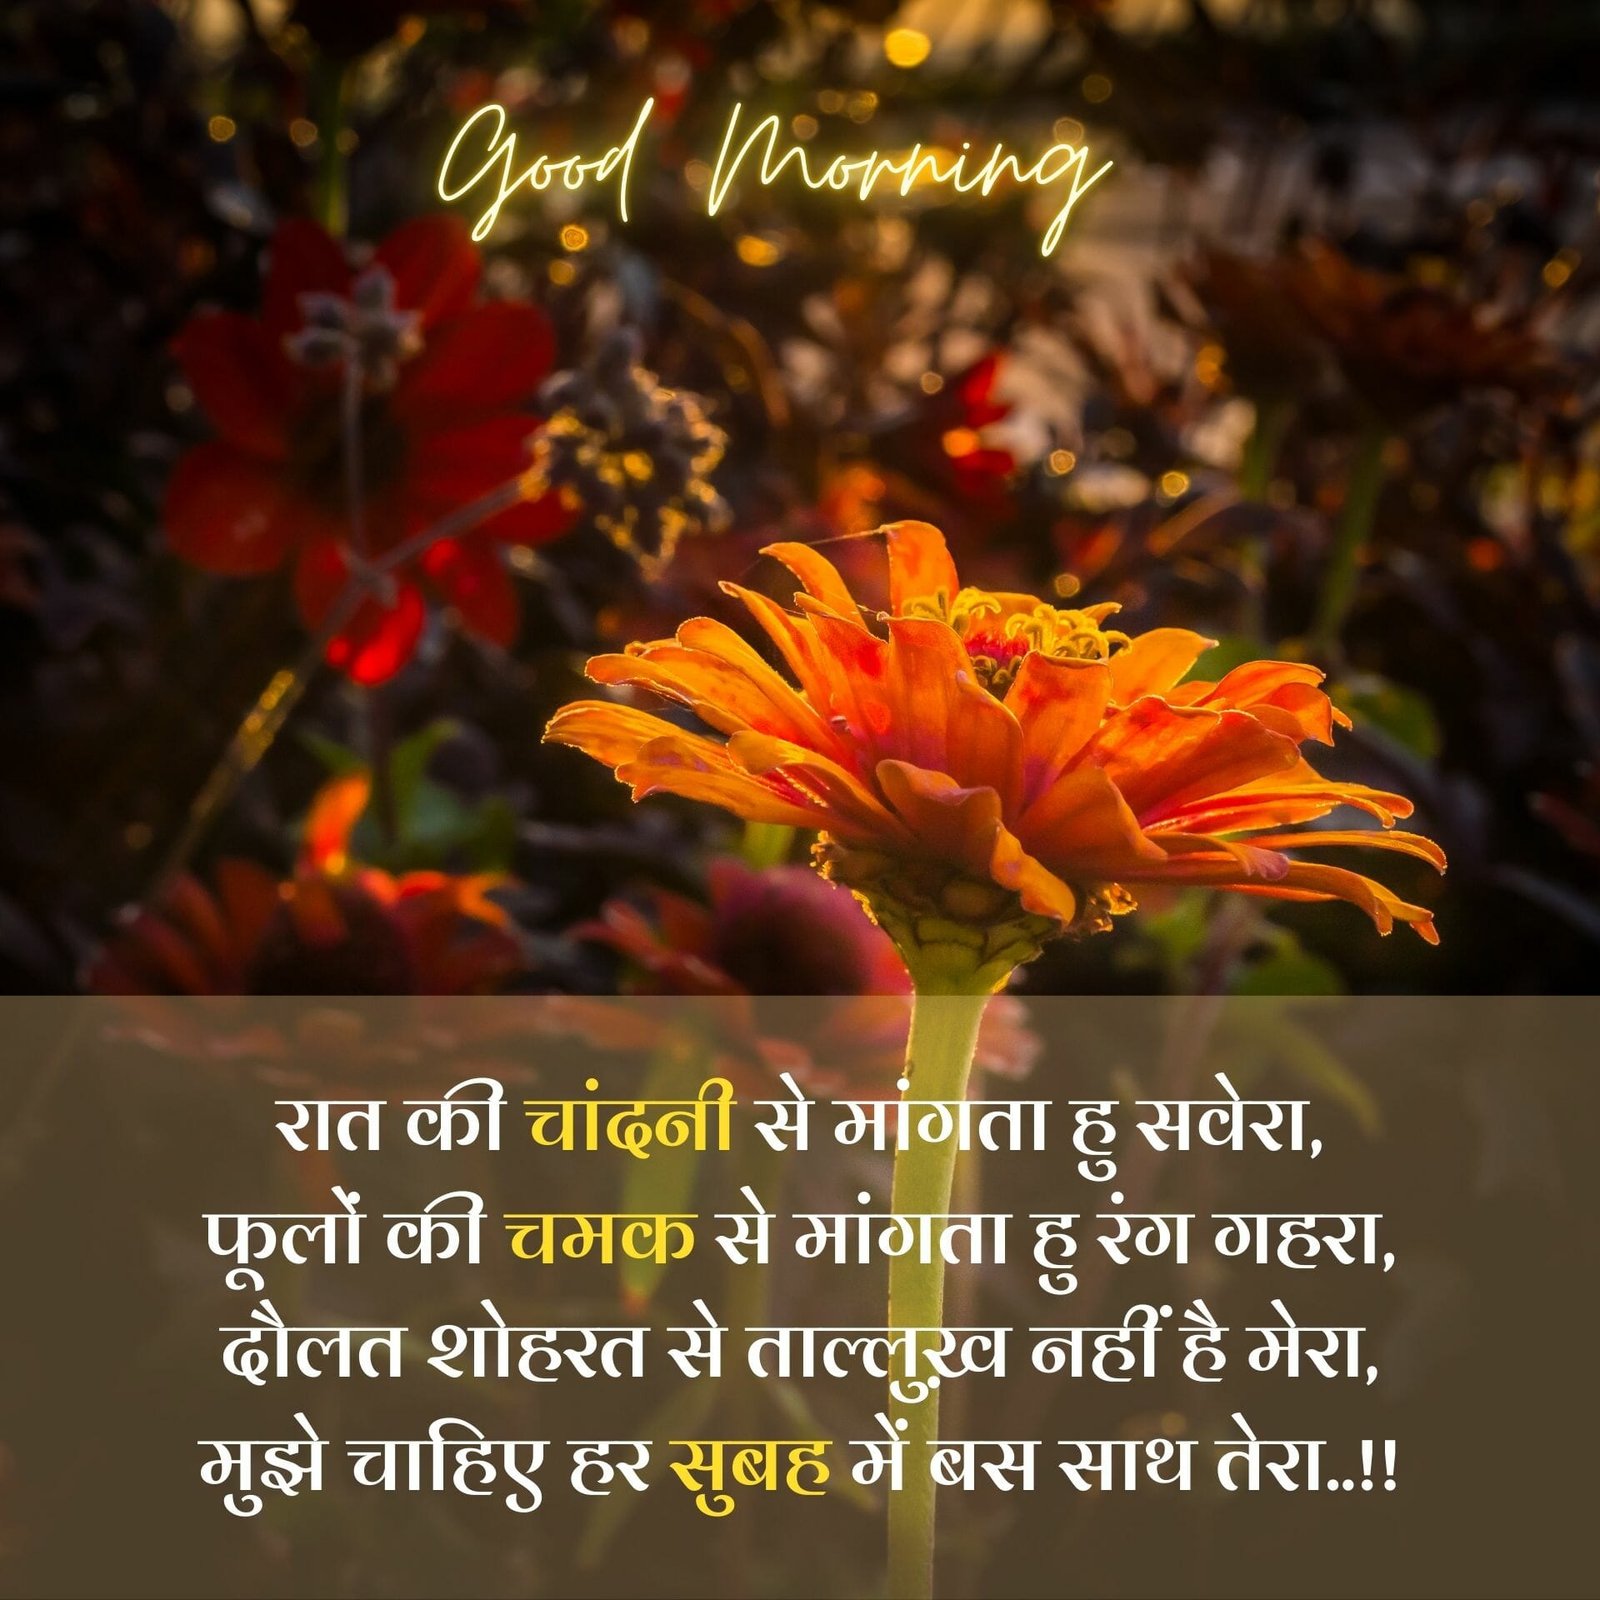 Good Morning Image in hindi for Whatsapp